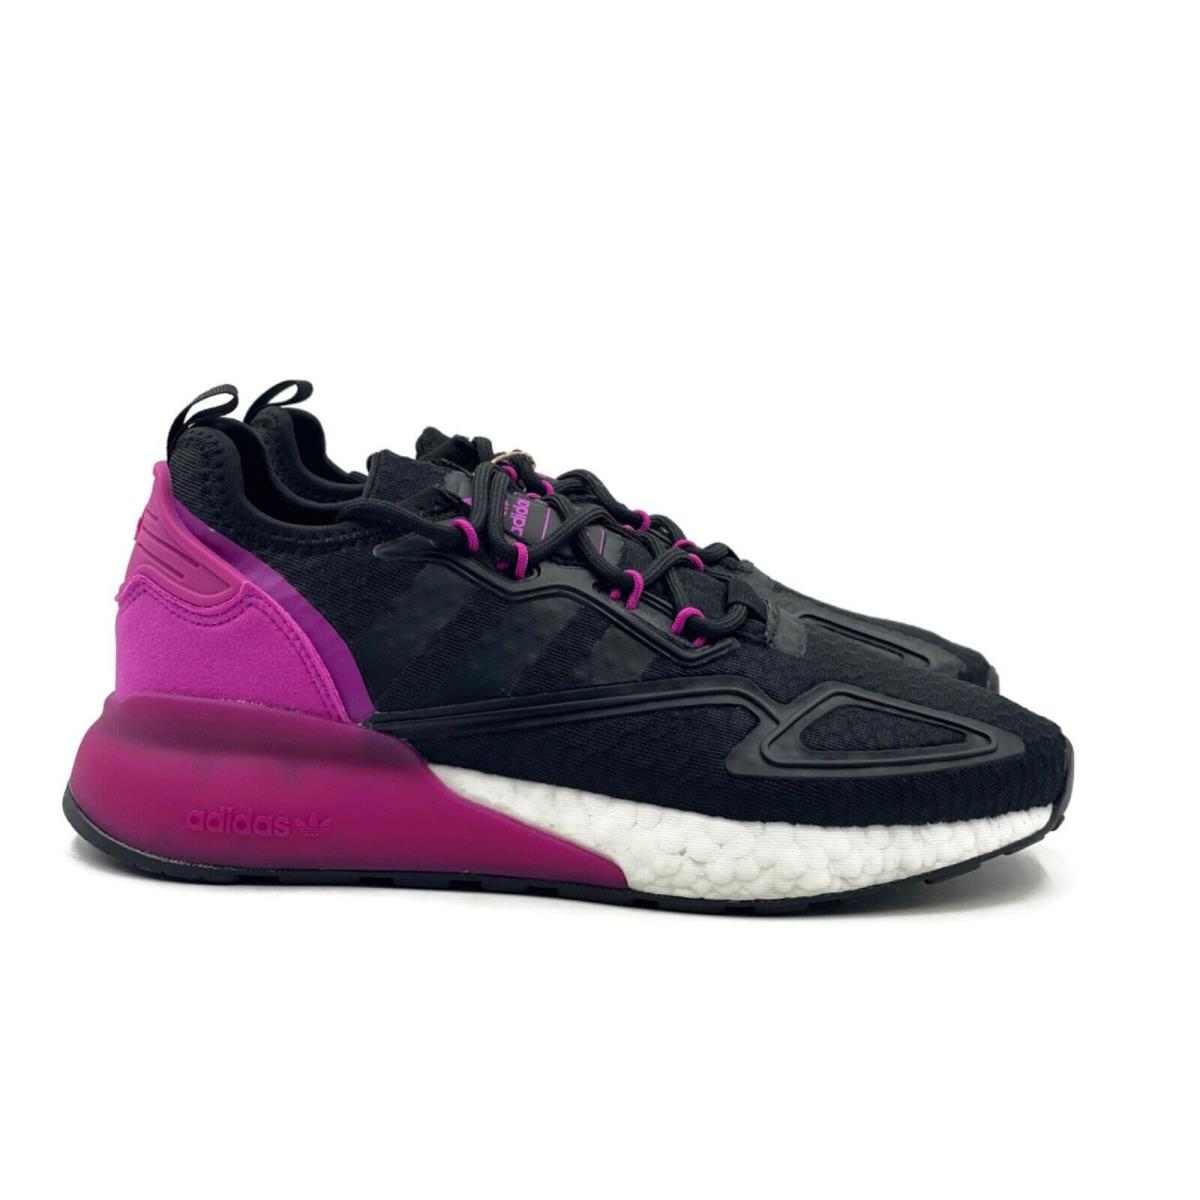 Adidas ZX 2K Boost Women Running Shoe Black Athletic Trainer Sneaker